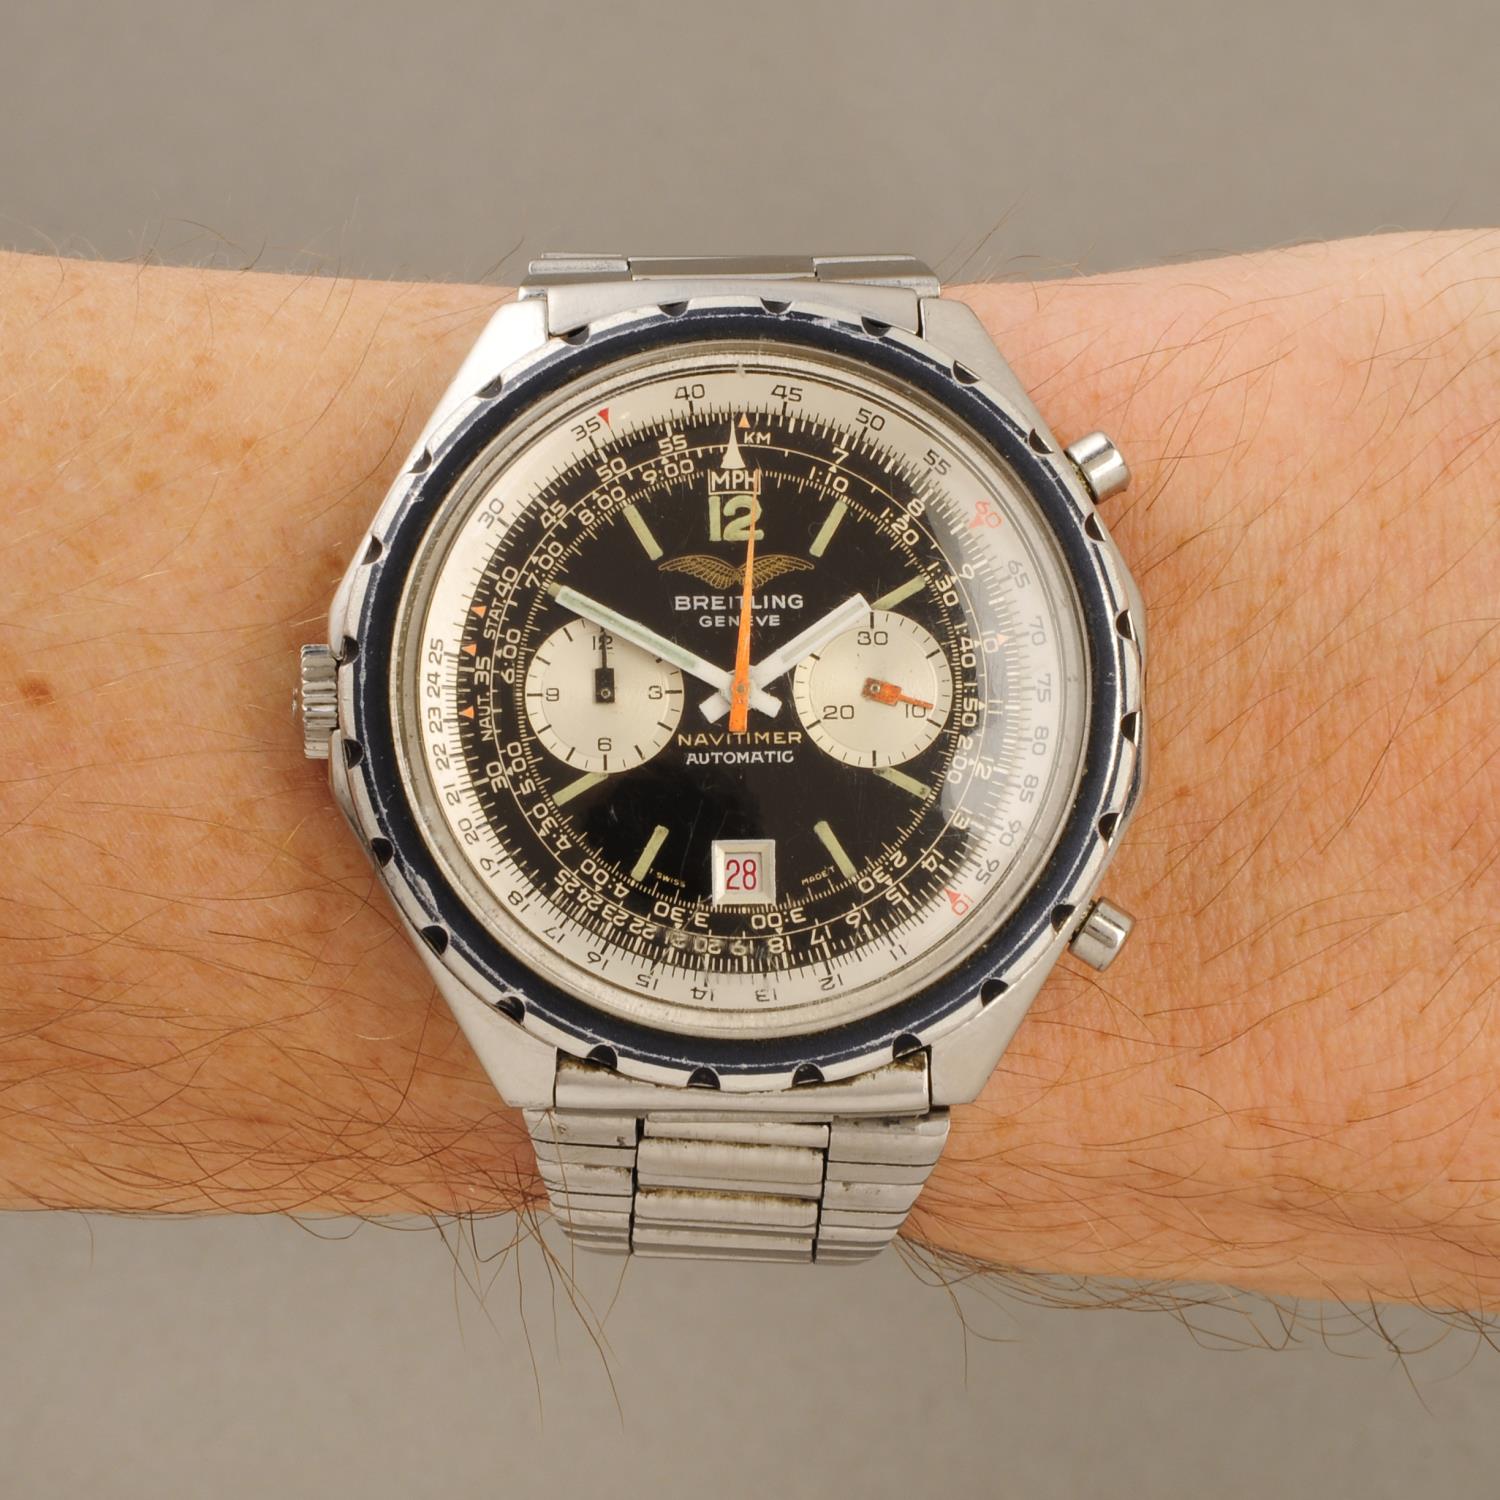 BREITLING - a gentleman's Navitimer Chrono-Matic chronograph bracelet watch. - Image 3 of 6